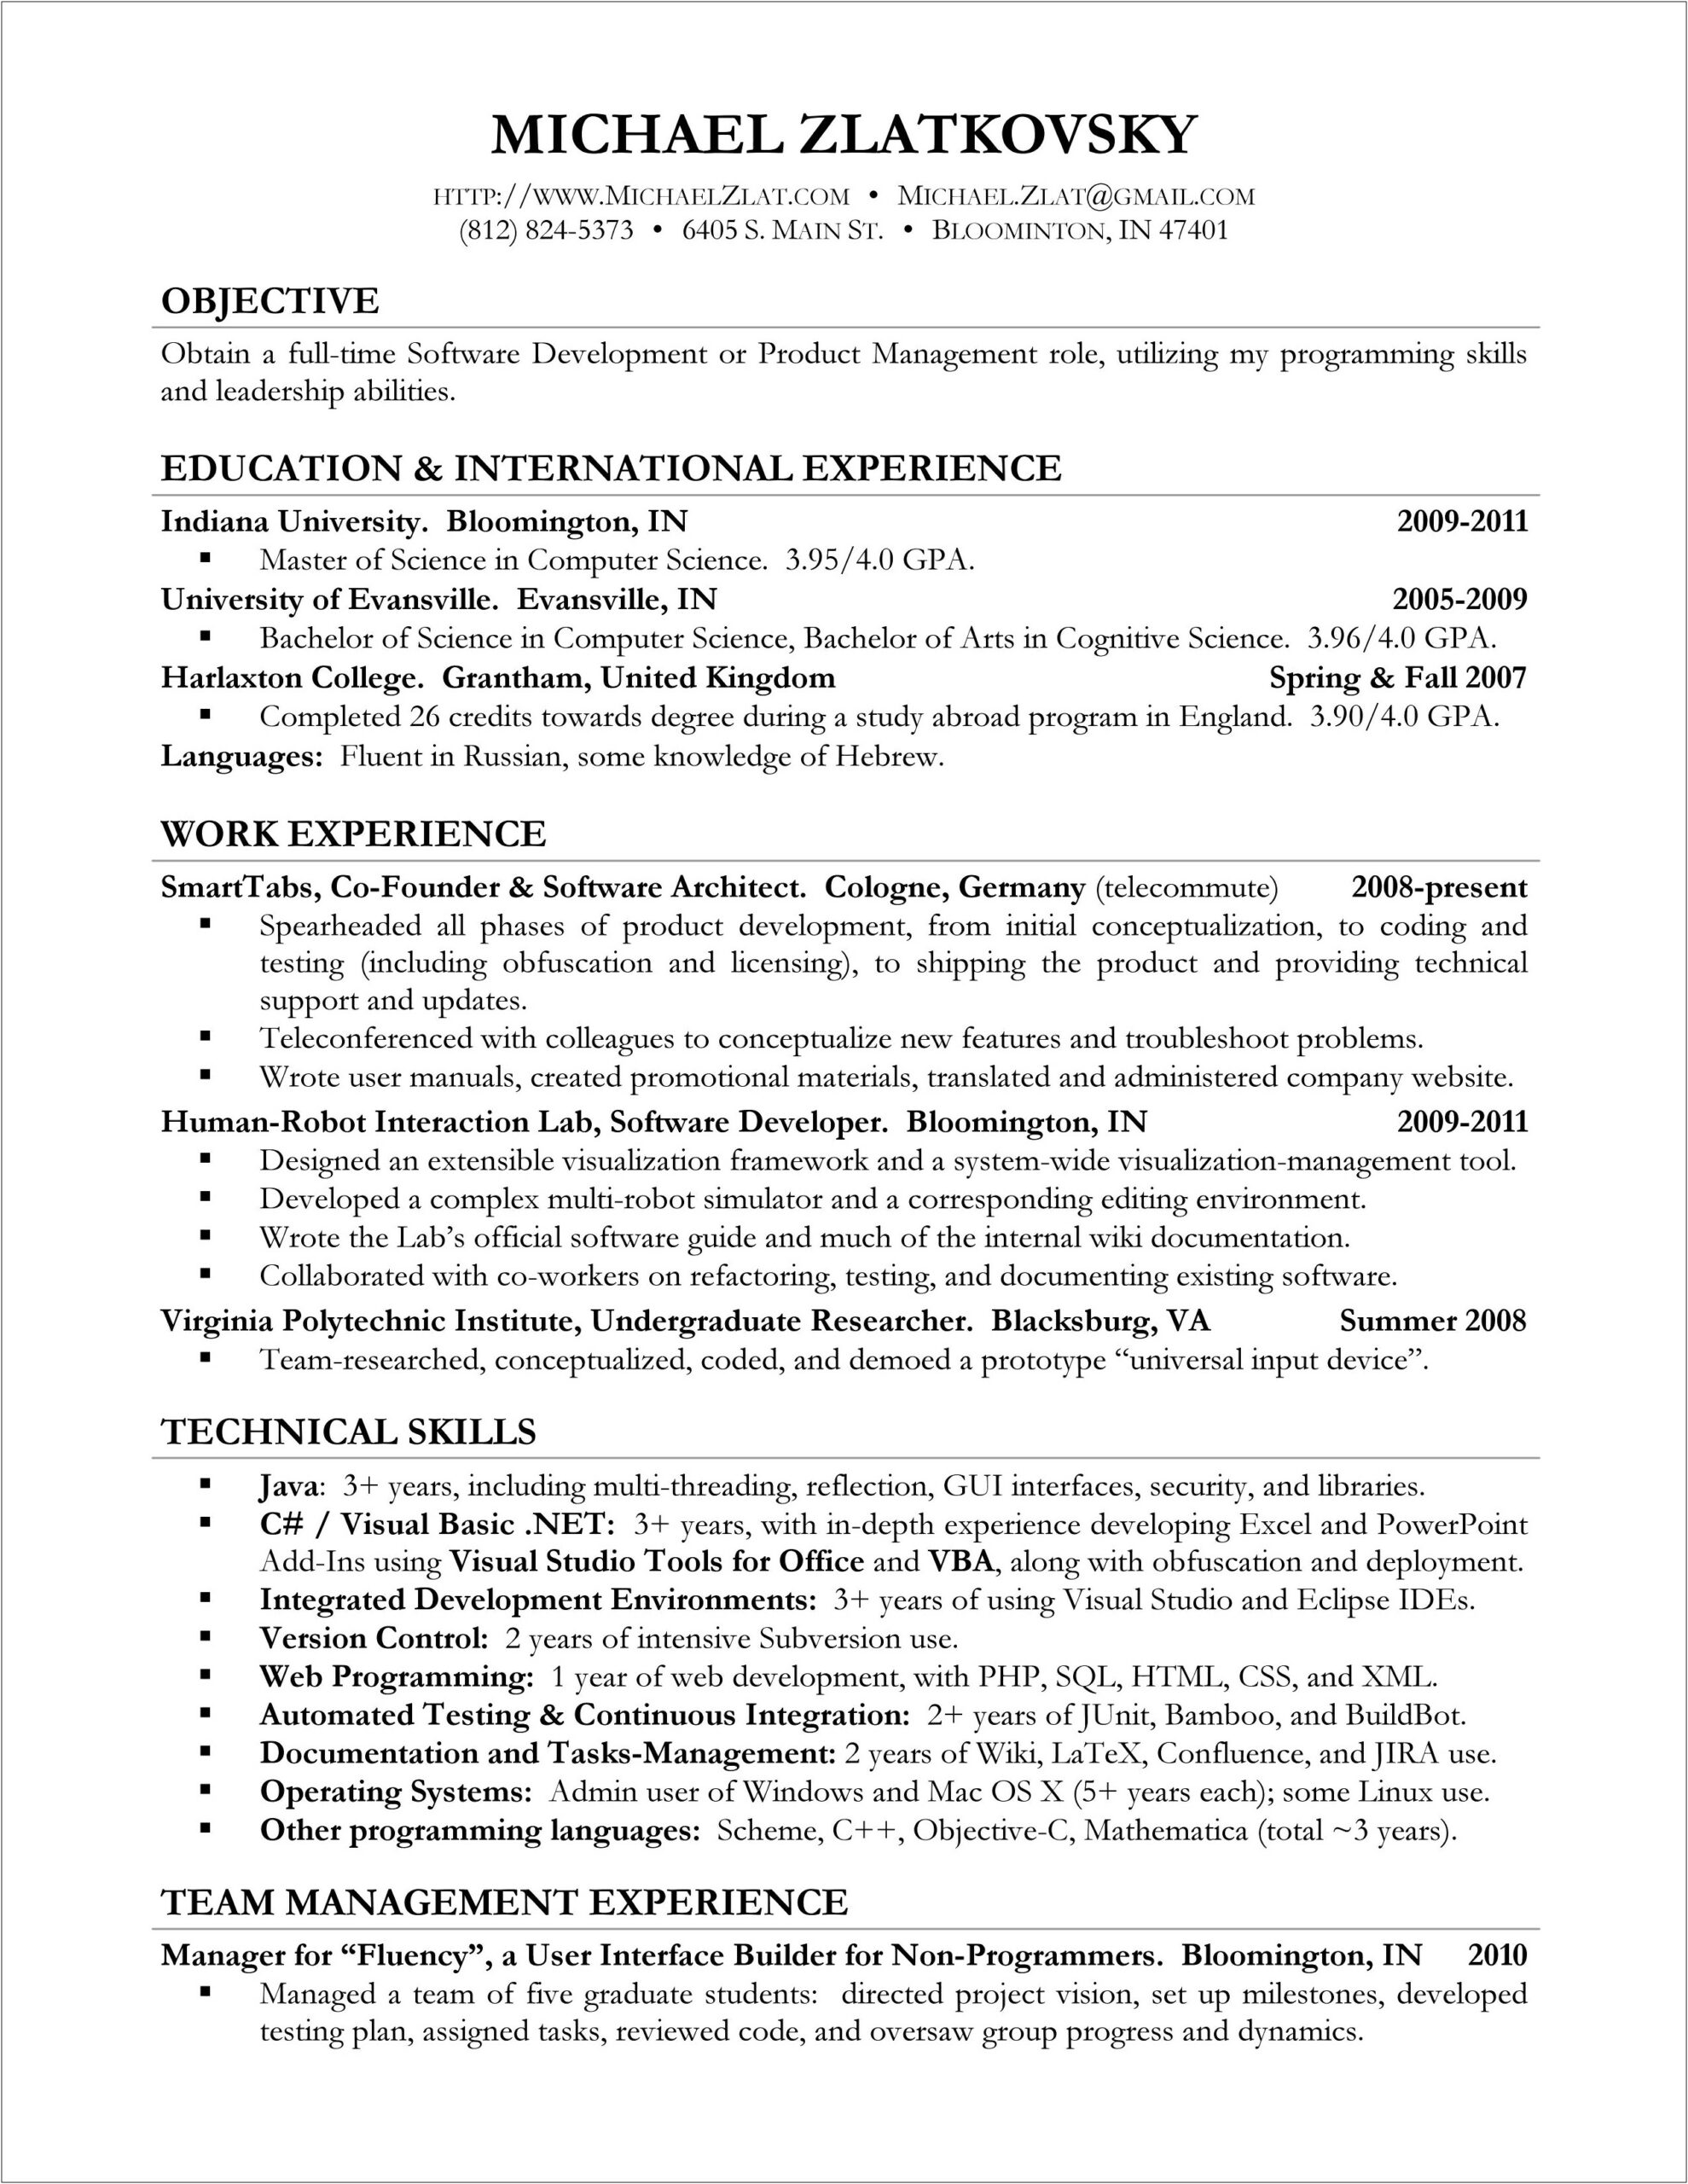 Resume For Masters Application Sample Harvard